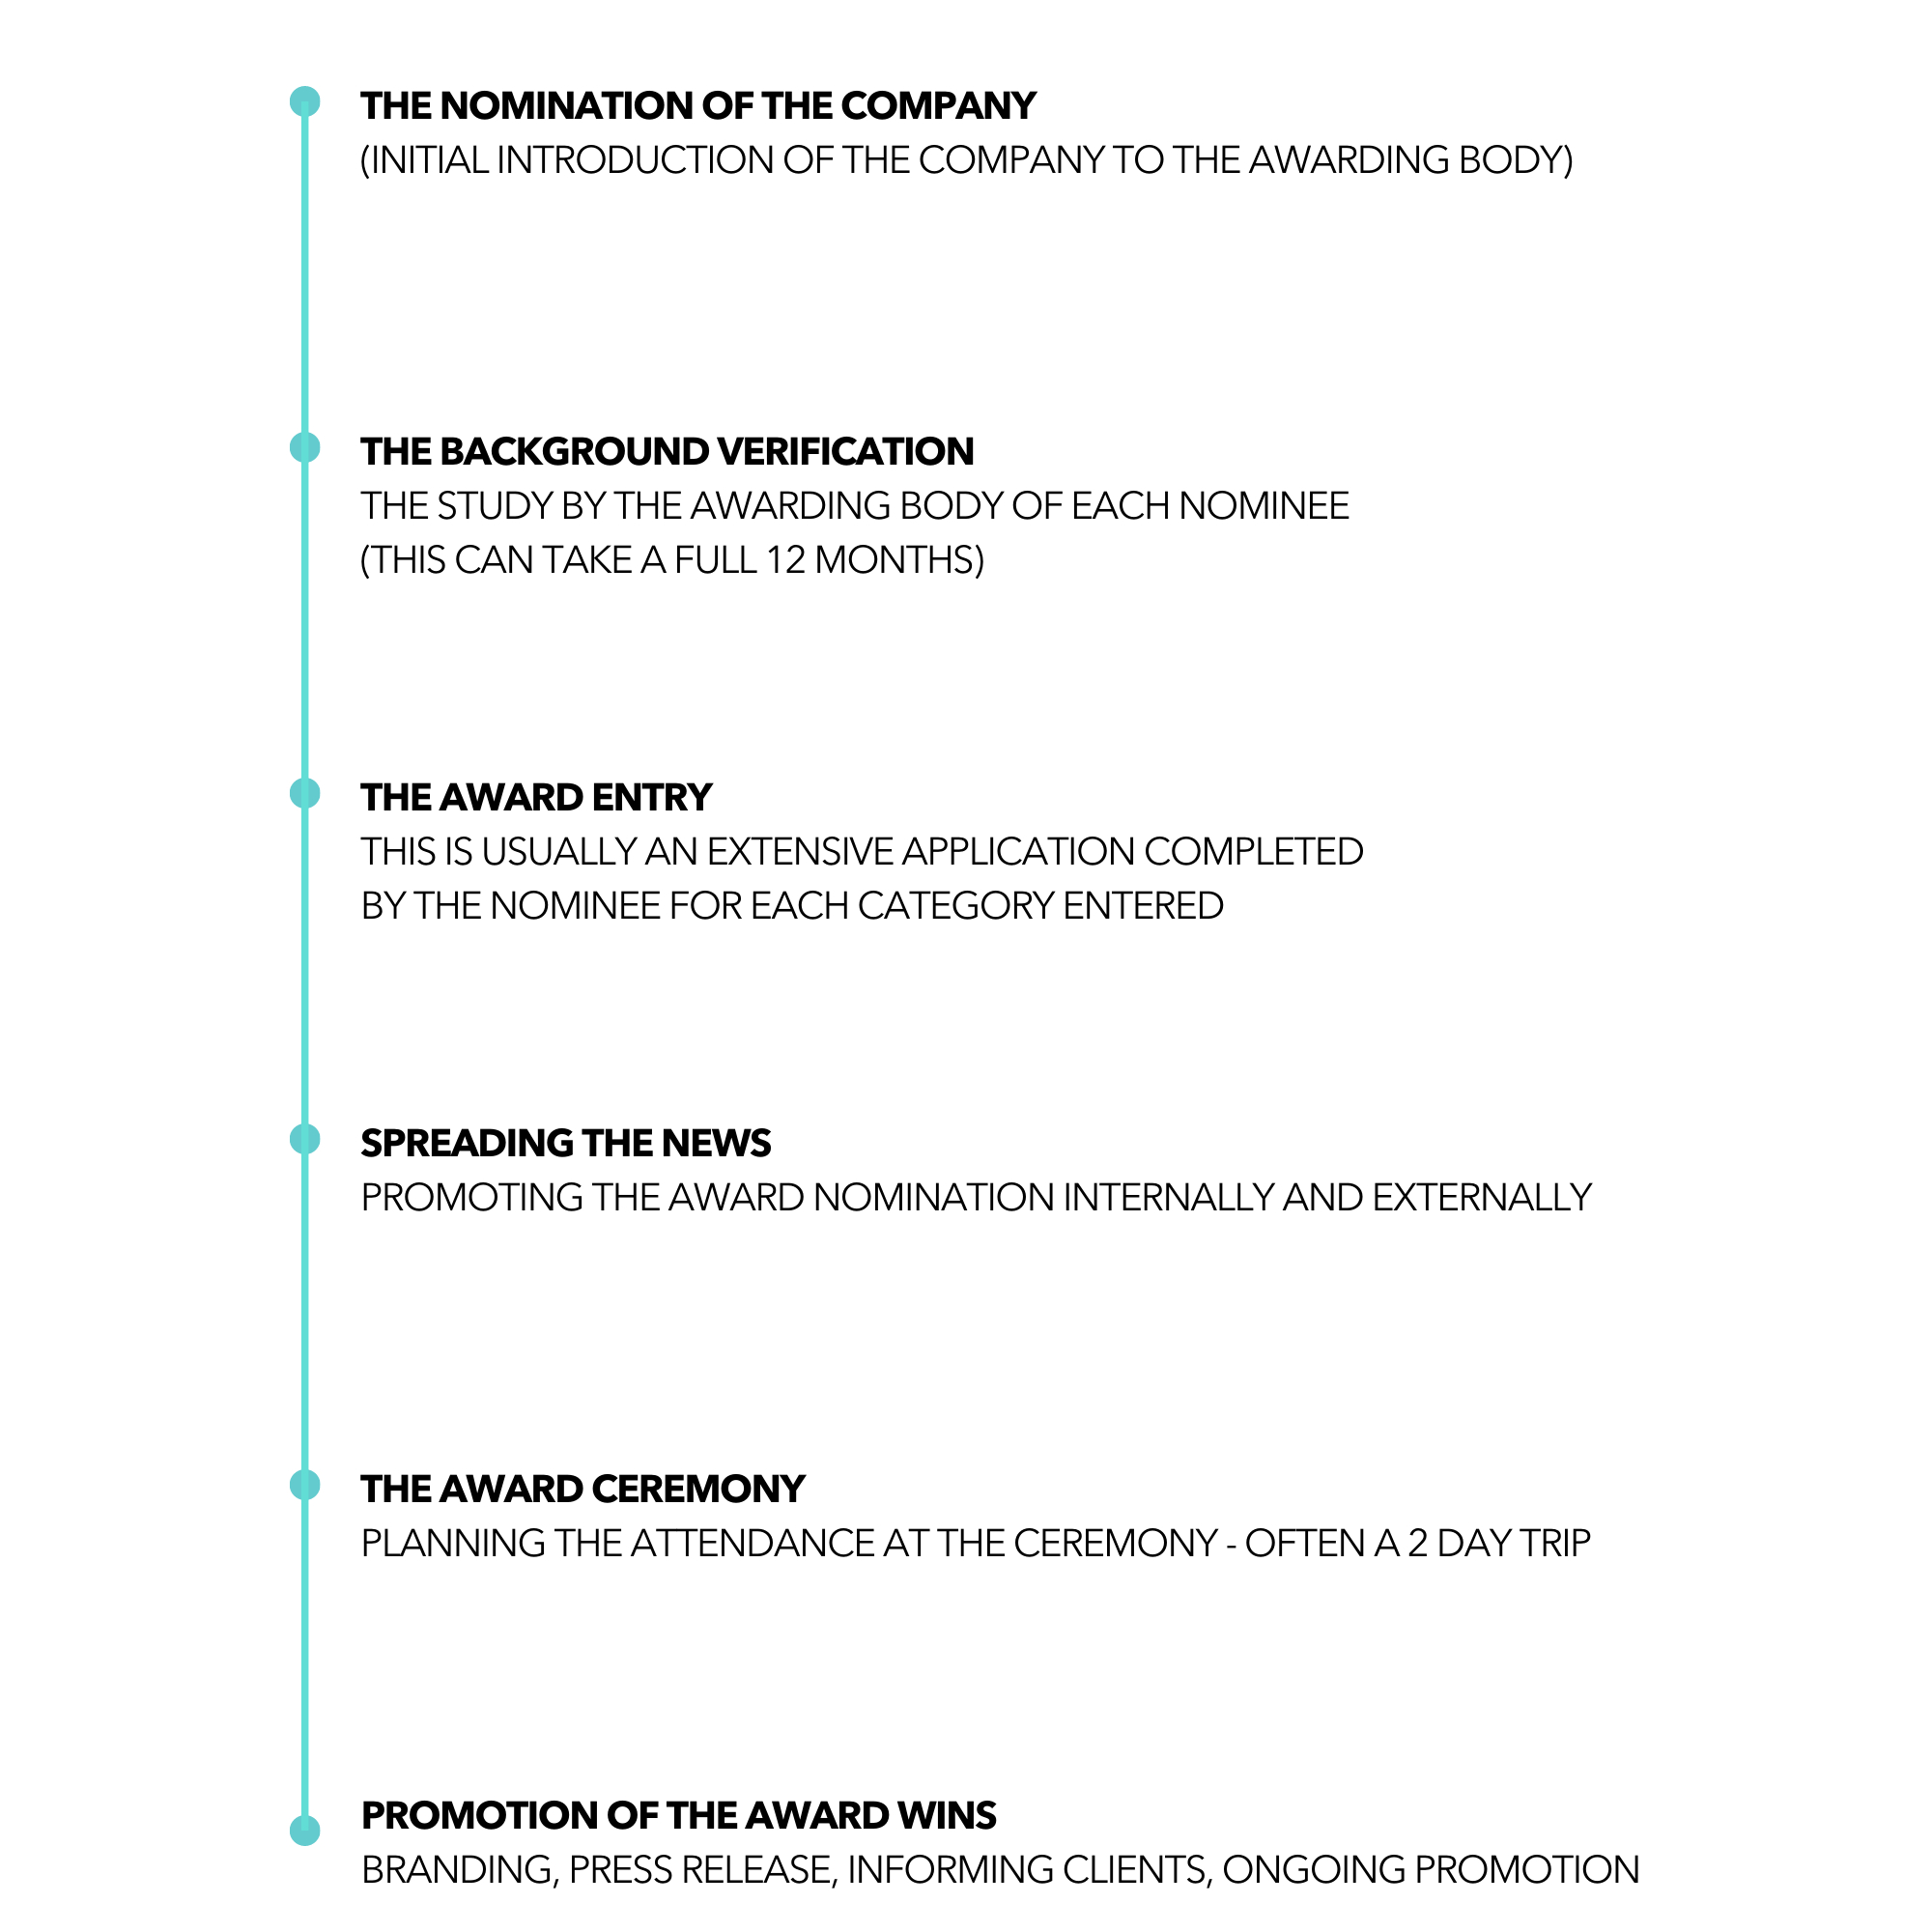 Timeline of Estate Agency Awards for Dawsons Property SwanseaDawsons Awards 2011 to 2022 (1)